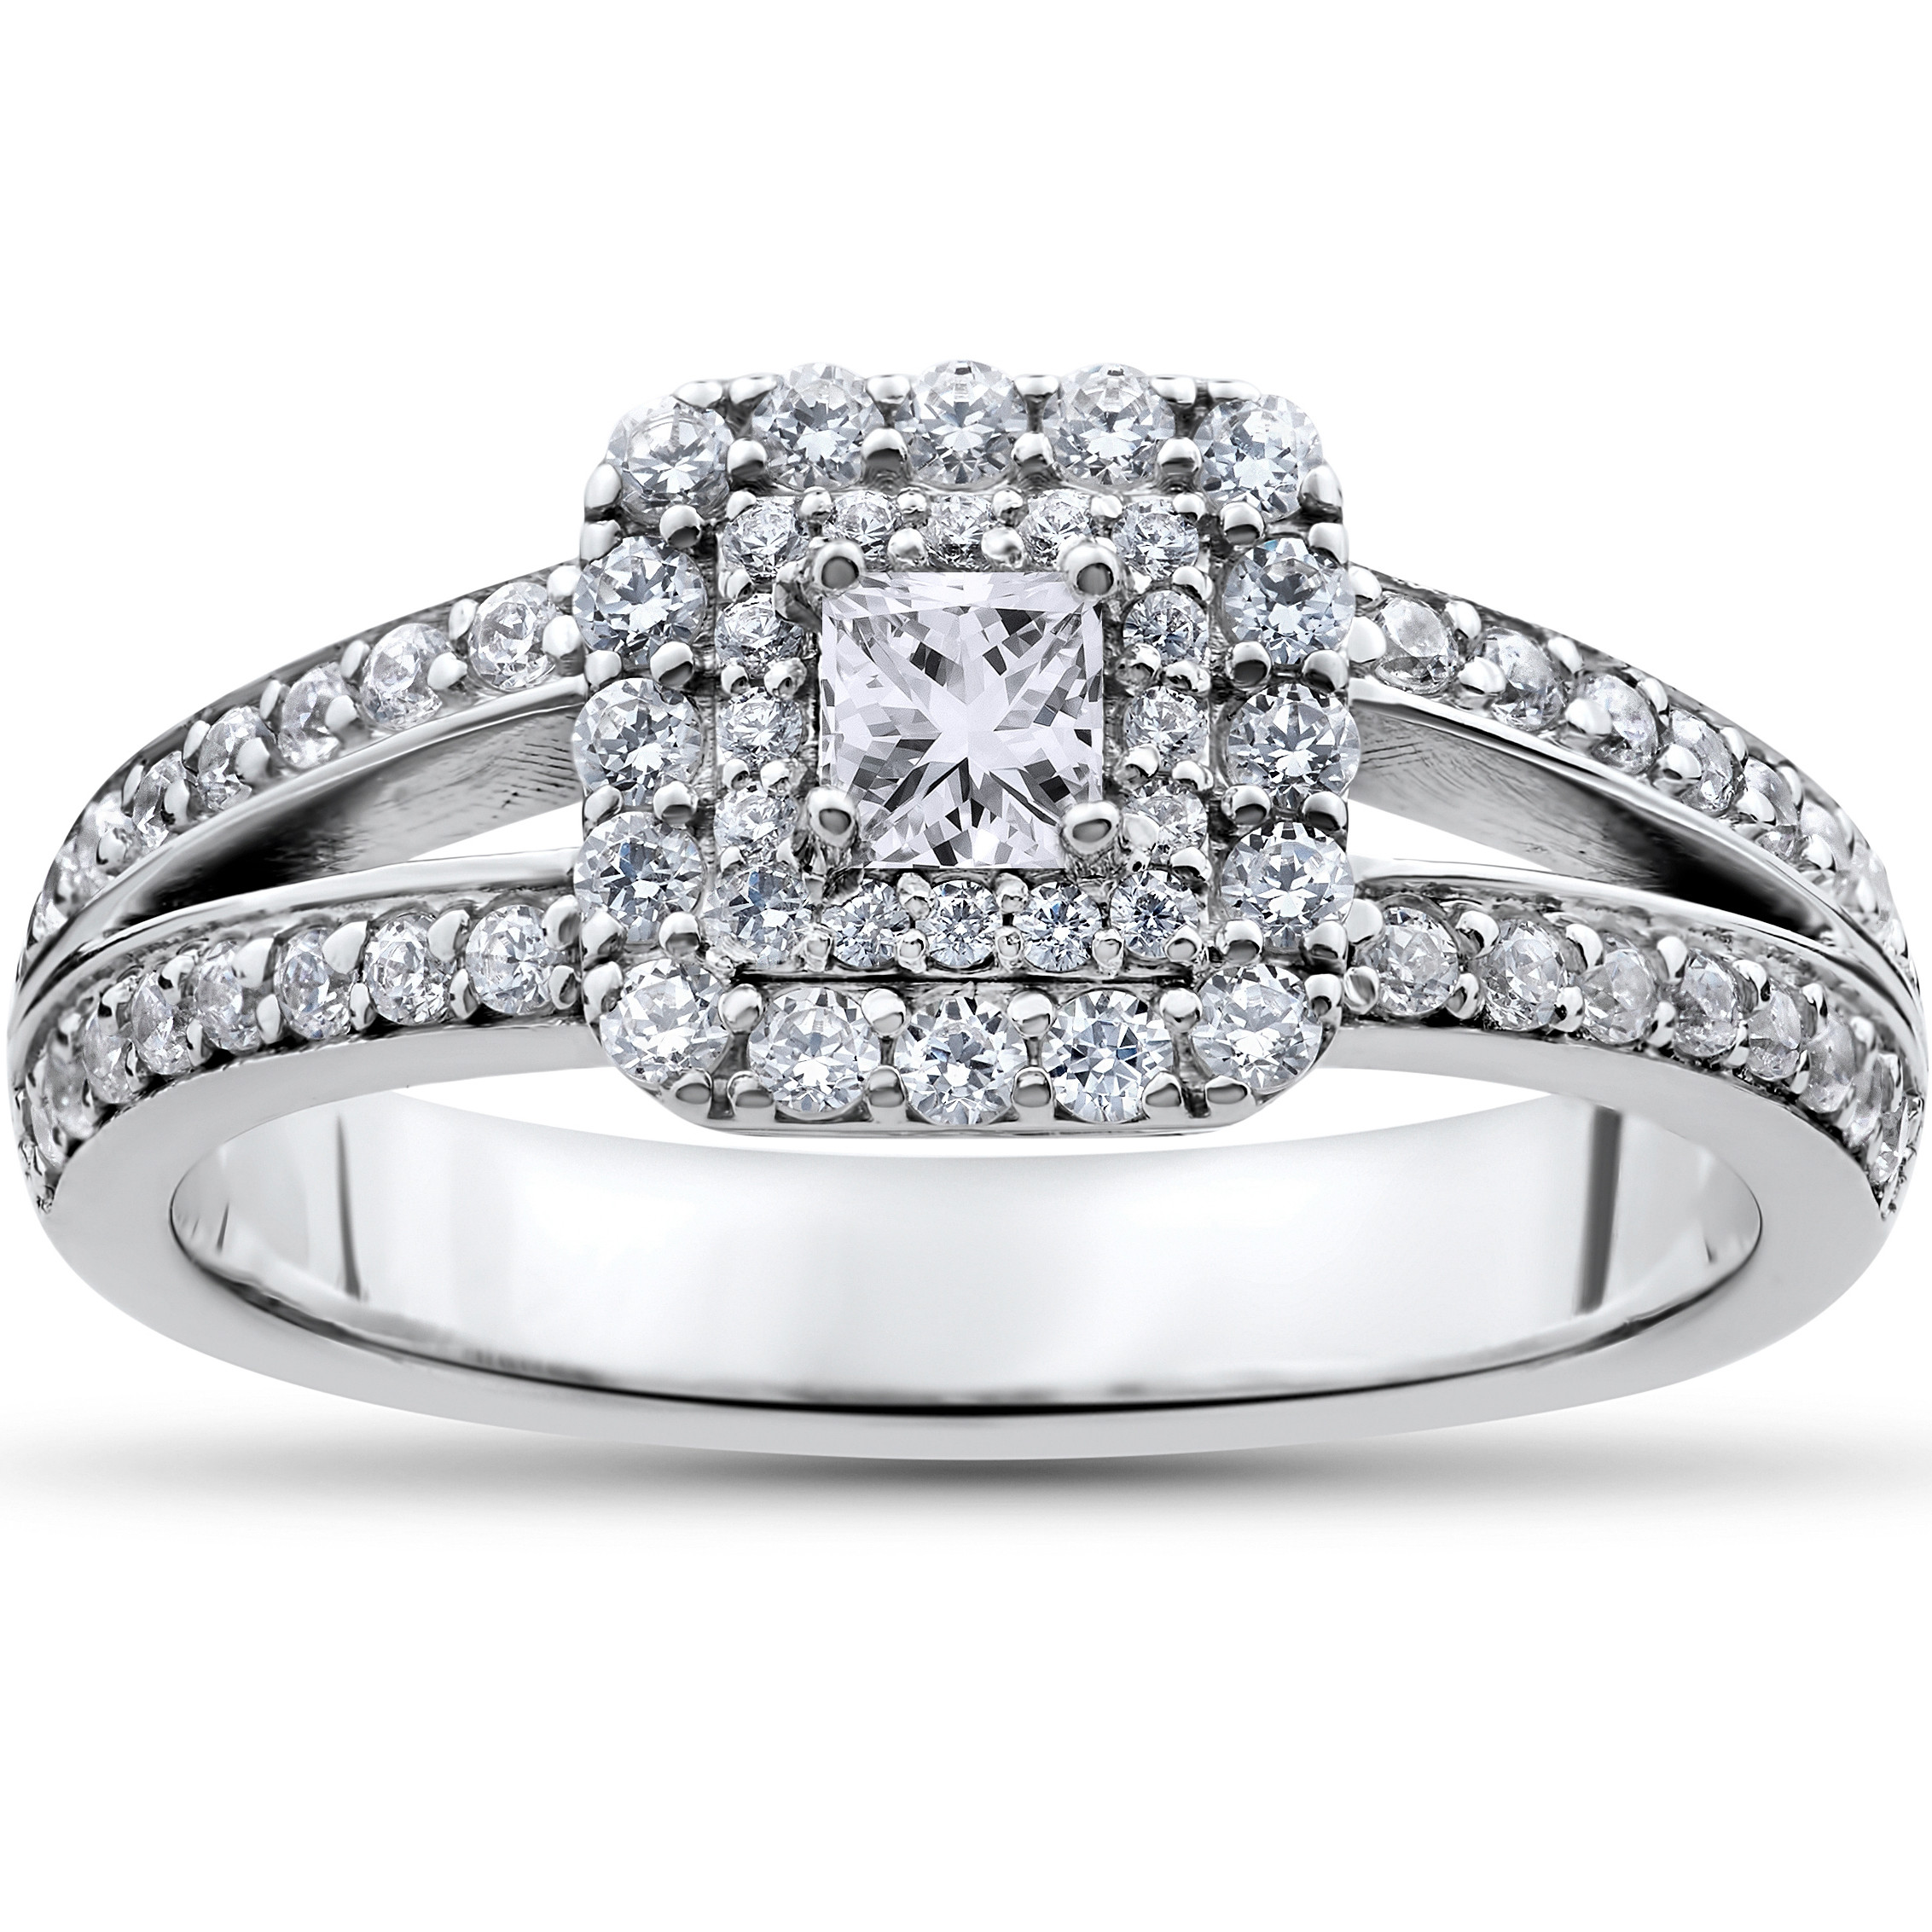 Princess Cut Halo Diamond Engagement Rings
 1 ct Princess Cut Diamond Double Halo Engagement Ring 14k